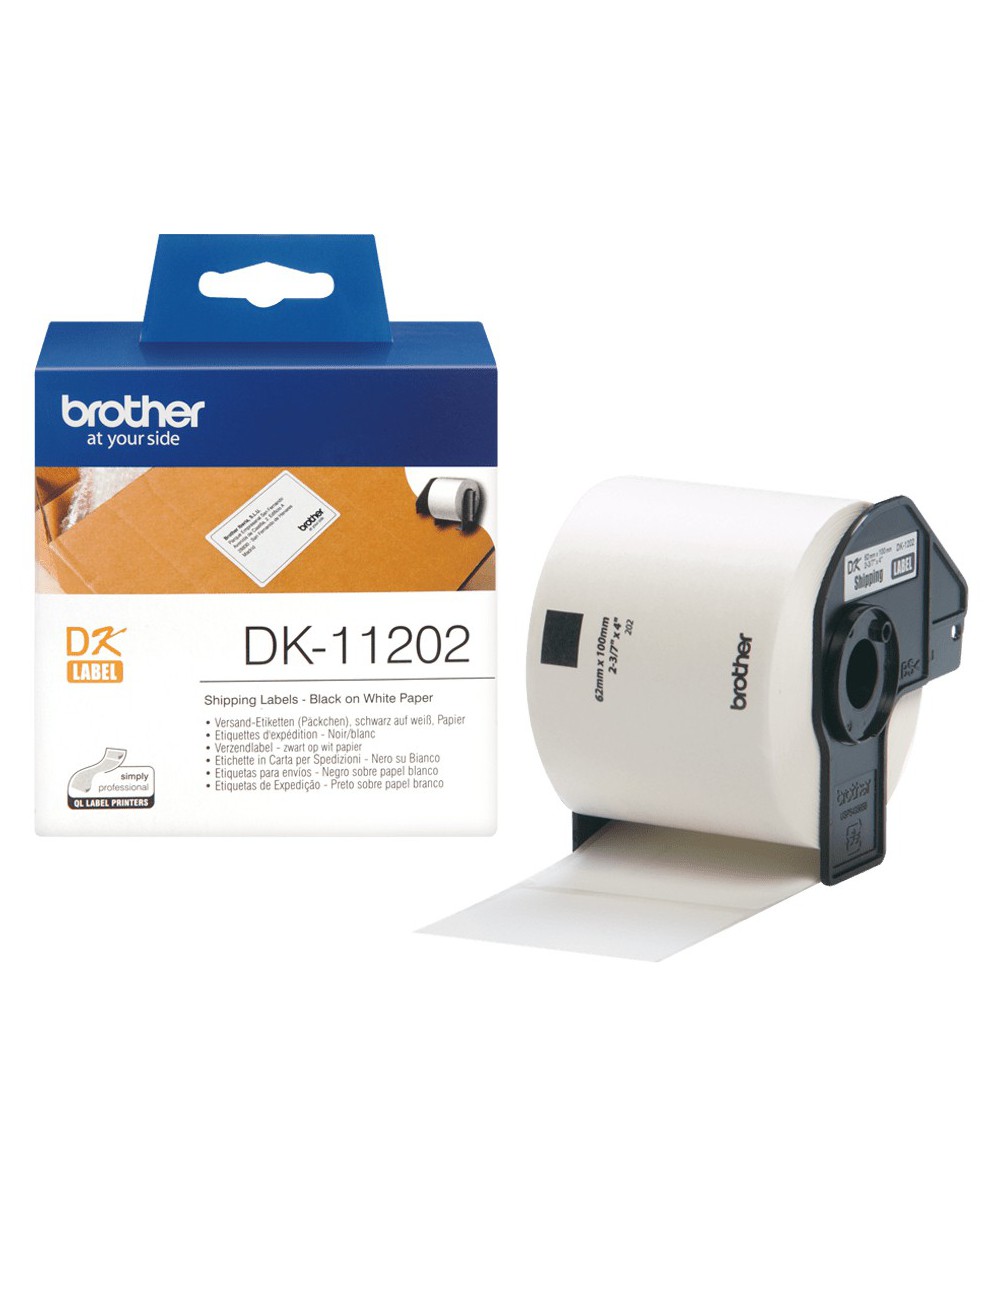 Brother DK-11202 cinta para impresora de etiquetas Negro sobre blanco